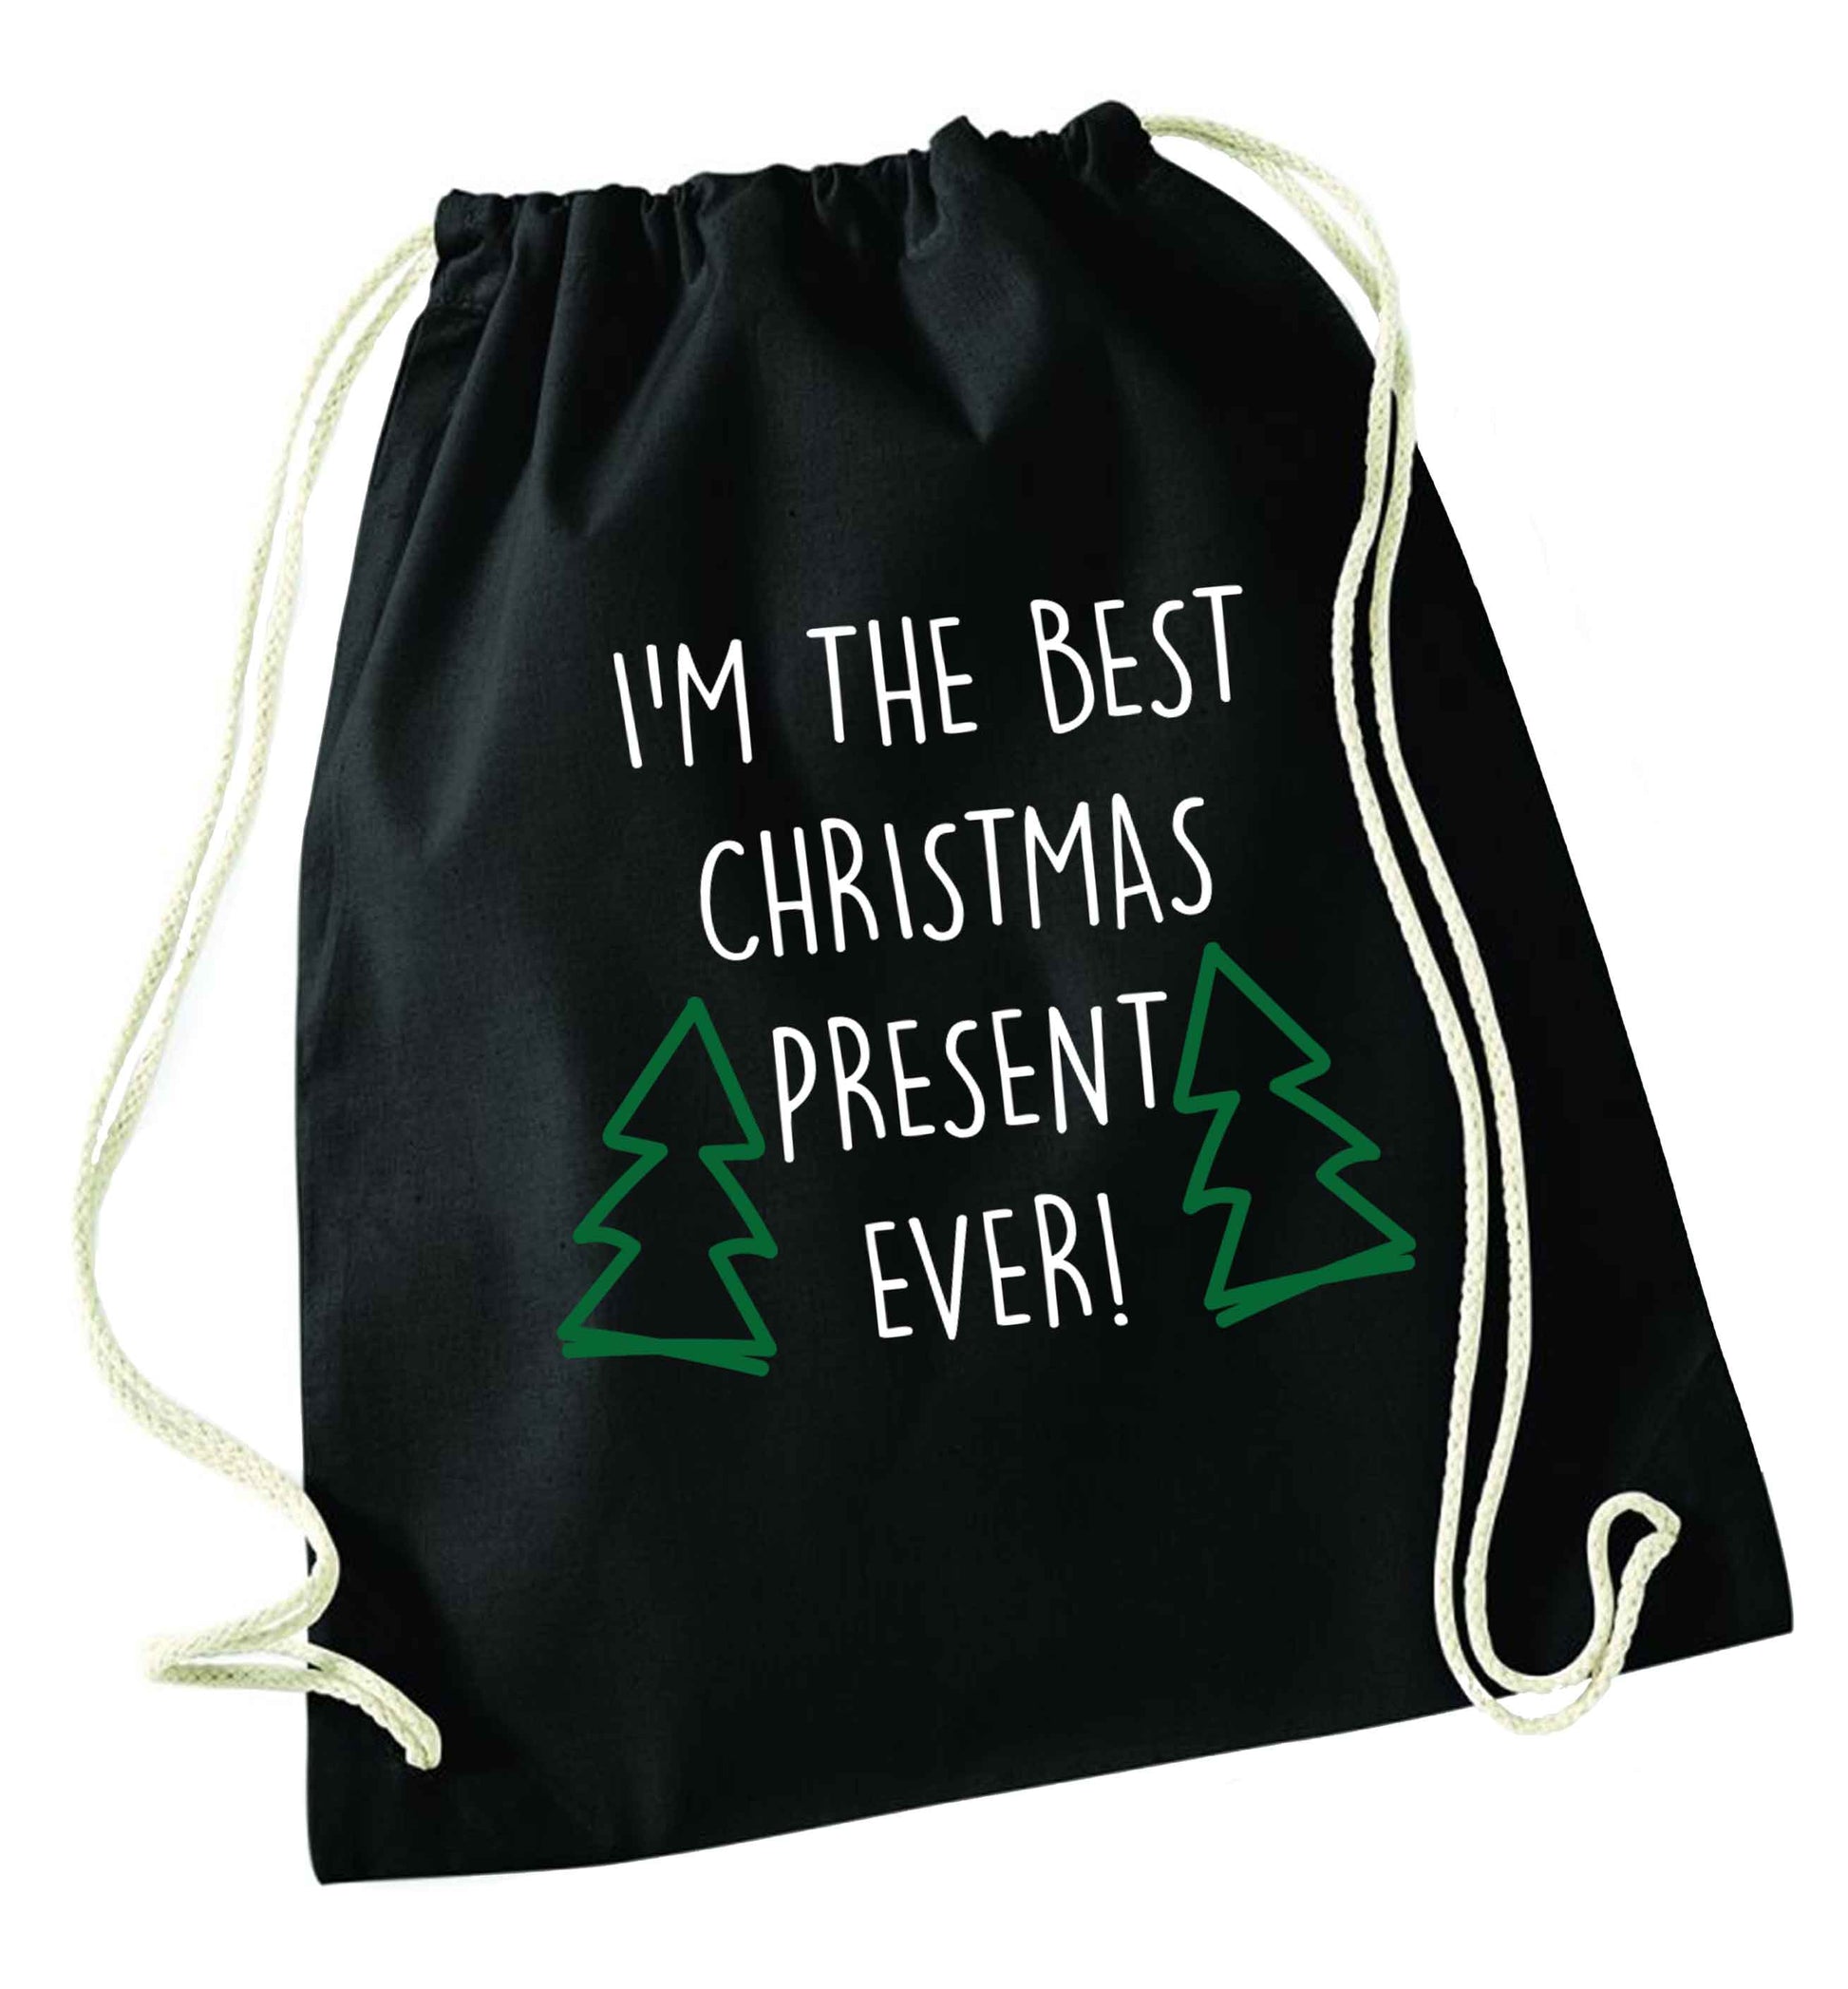 I'm the best Christmas present ever black drawstring bag